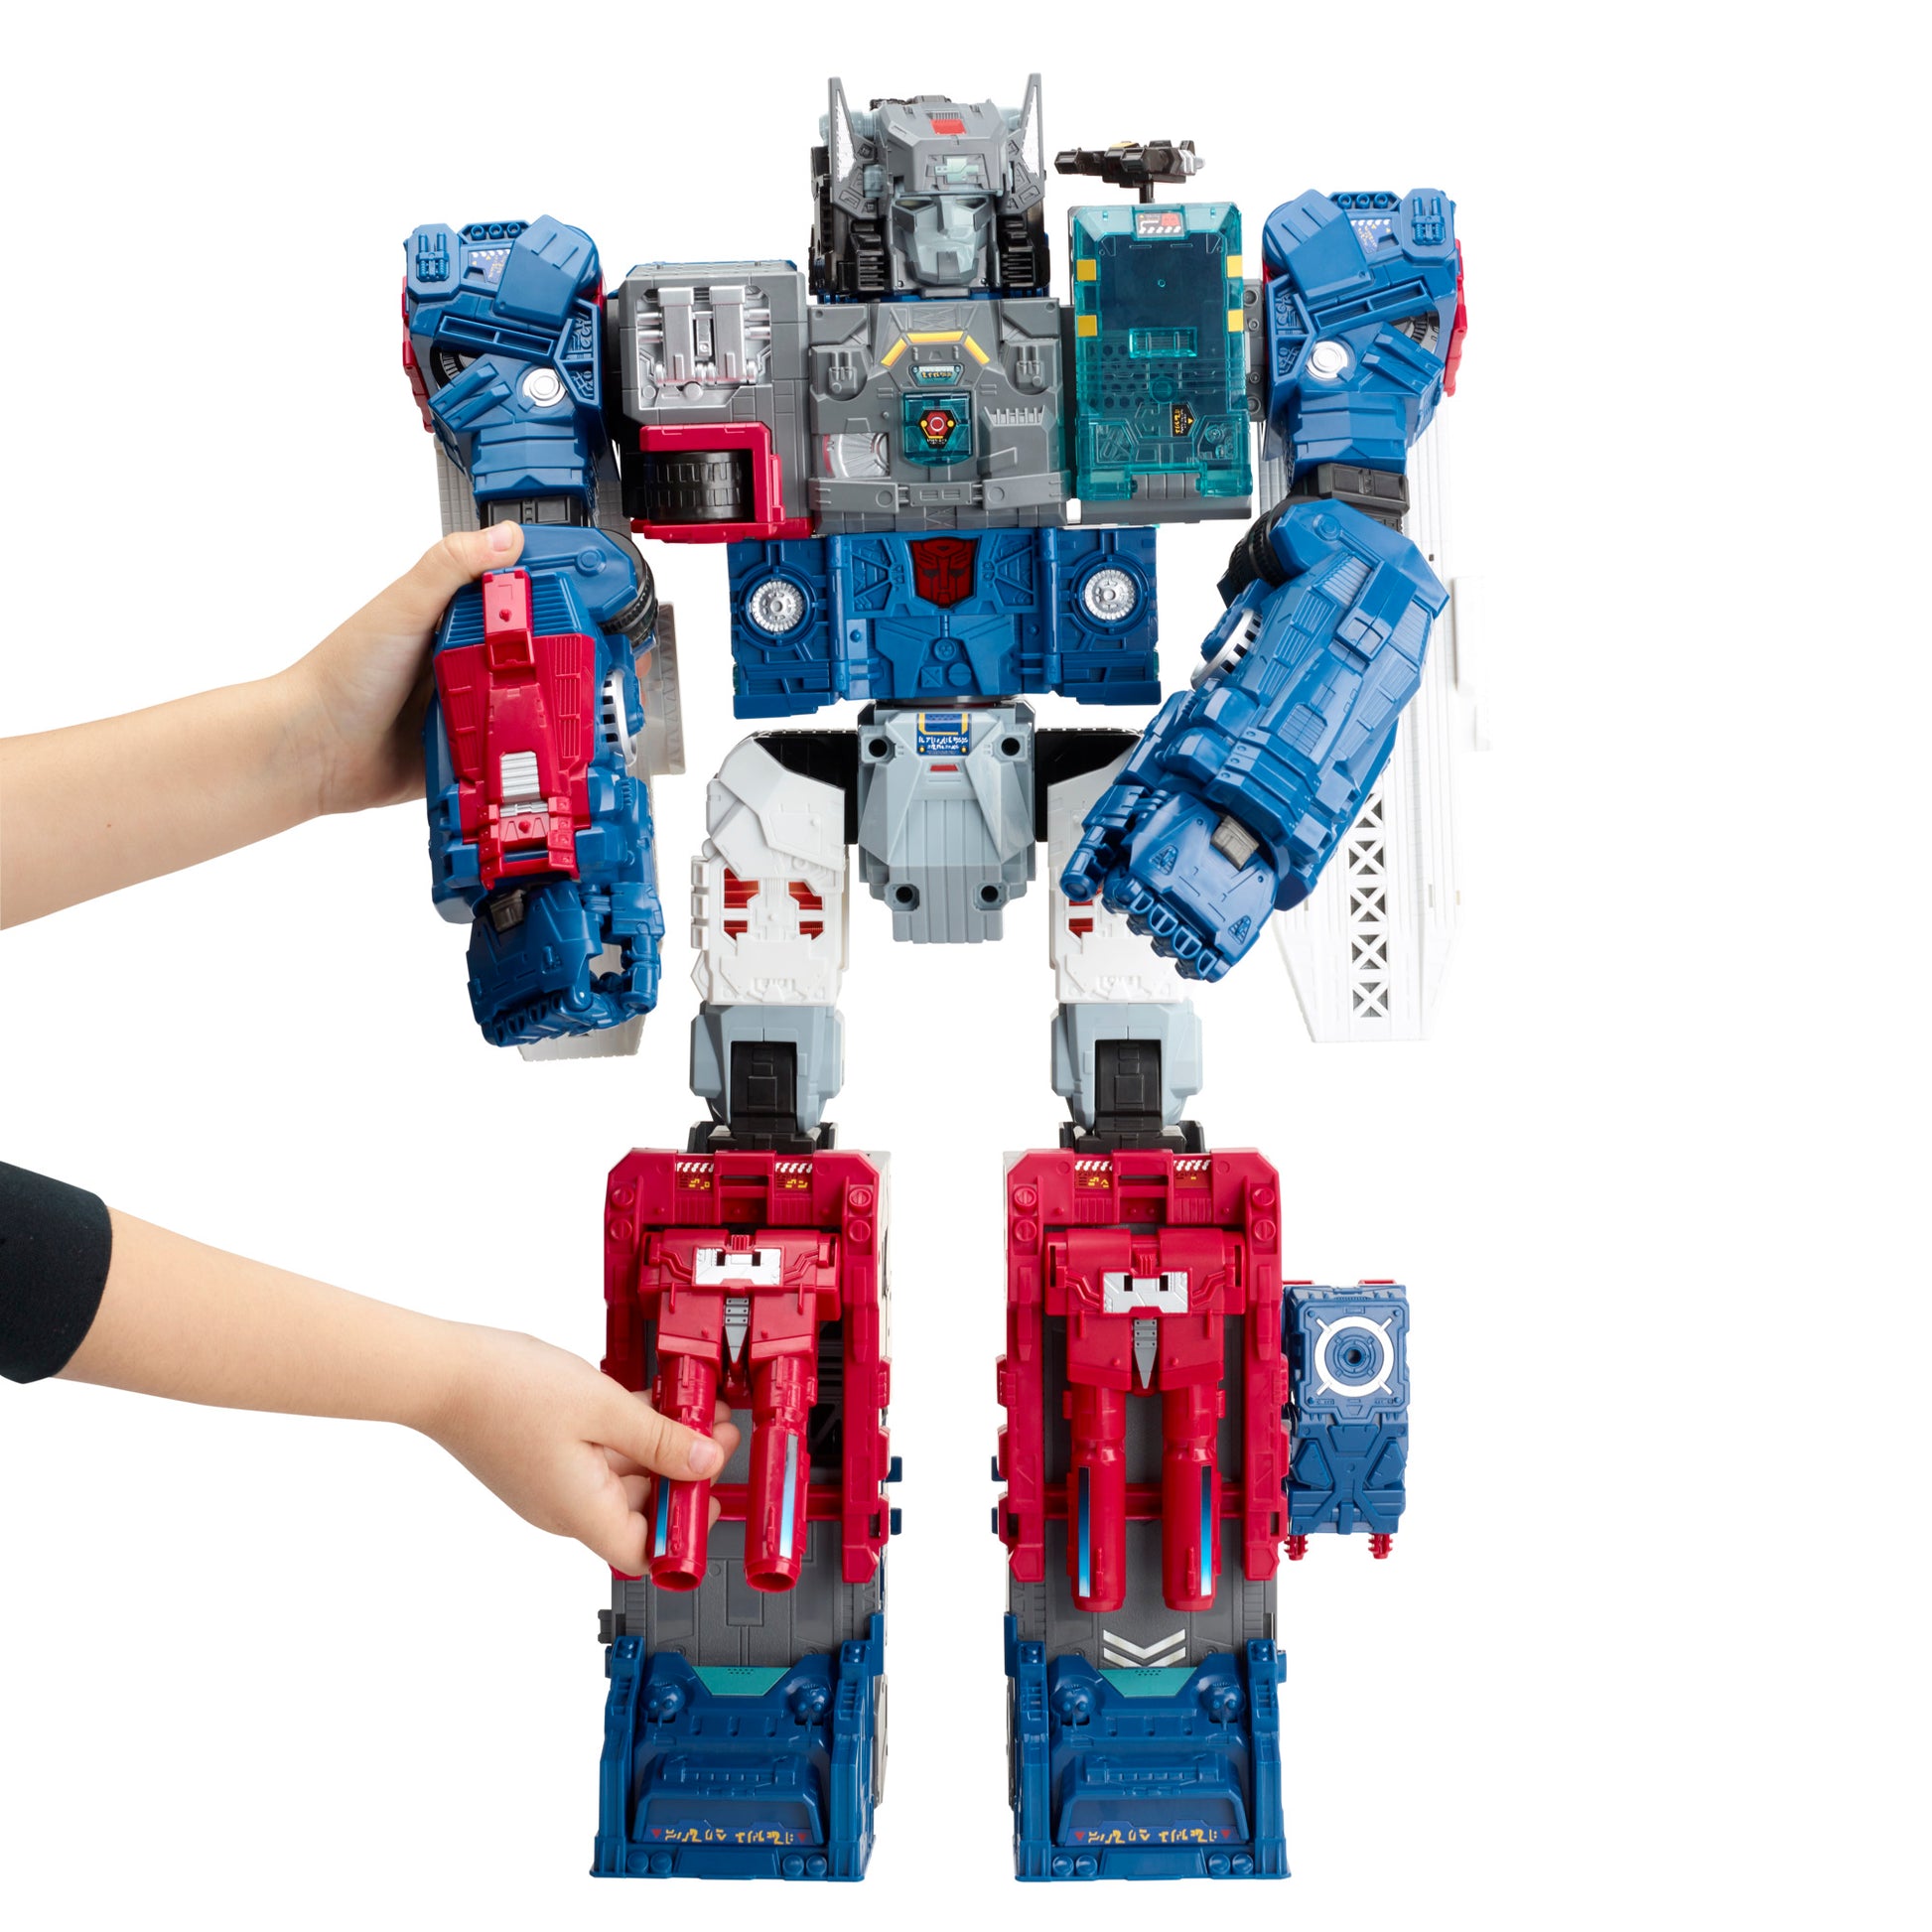 Transformers Generations Titans Return Titan Class Fortress Maximus Action Figure Toy